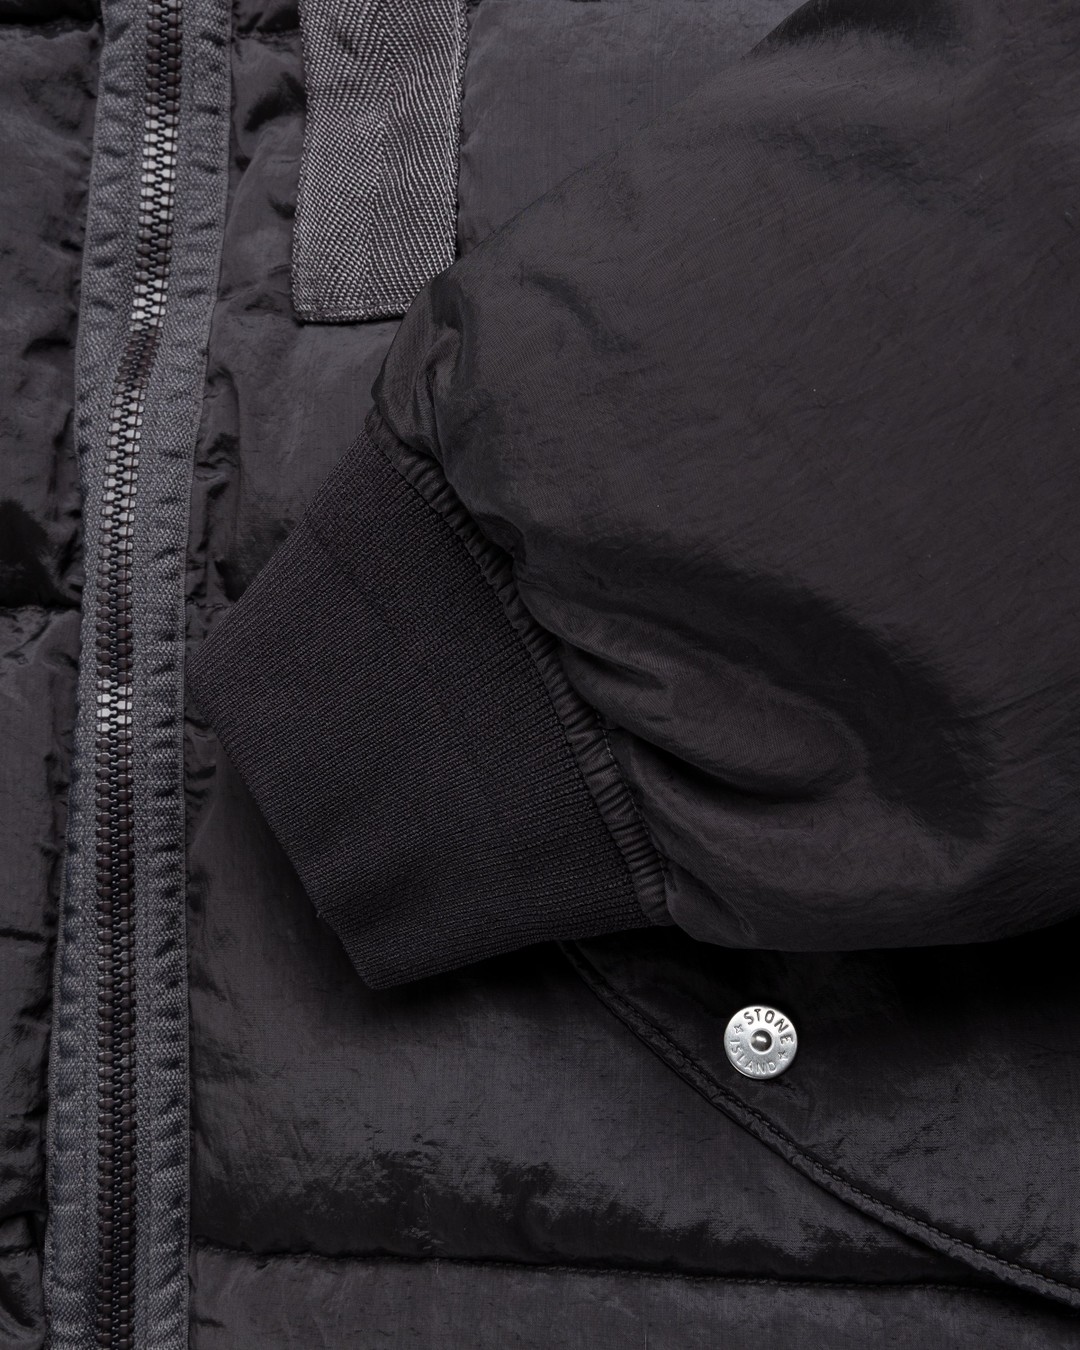 Stone Island – Nylon Metal Down Jacket Anrtacite - Outerwear - Black - Image 8